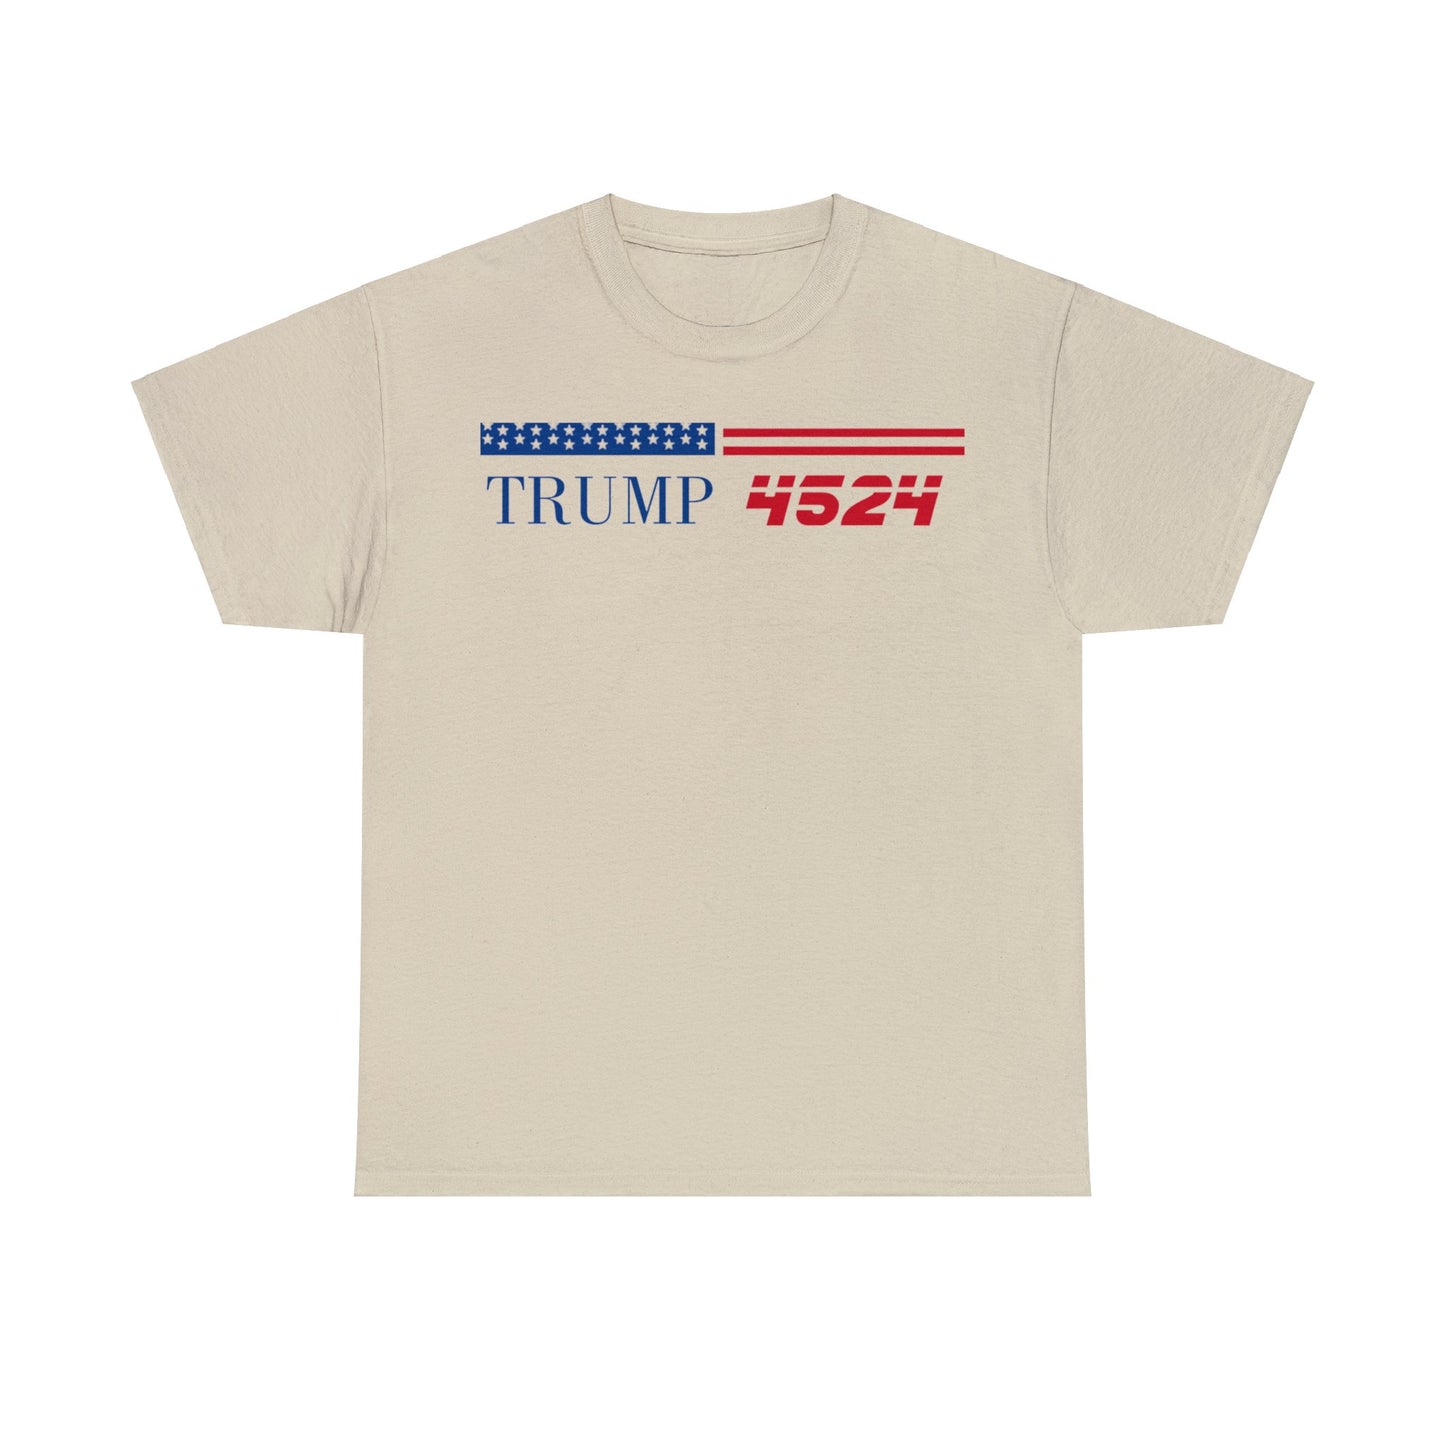 Trump 4524 Shirt